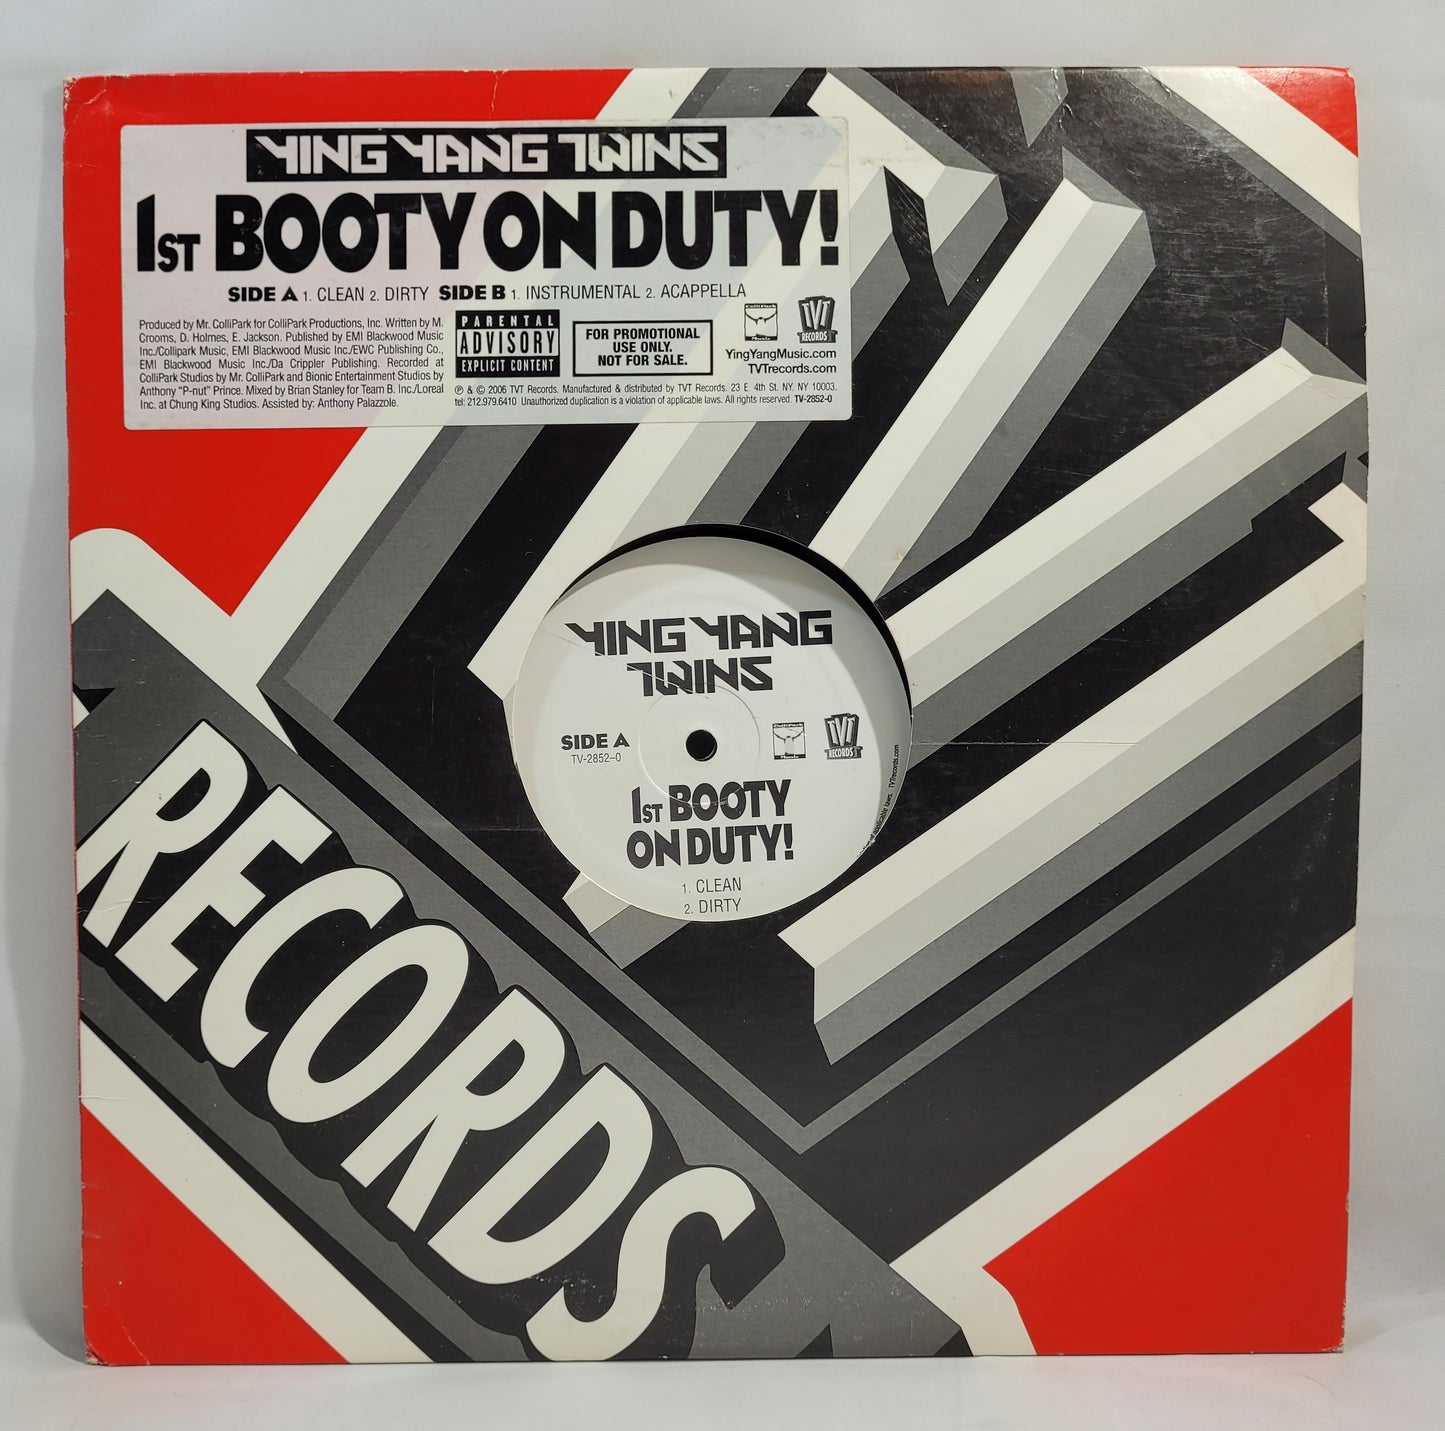 Ying Yang Twins - 1st Booty on Duty! [Vinyl Record 12" Single]